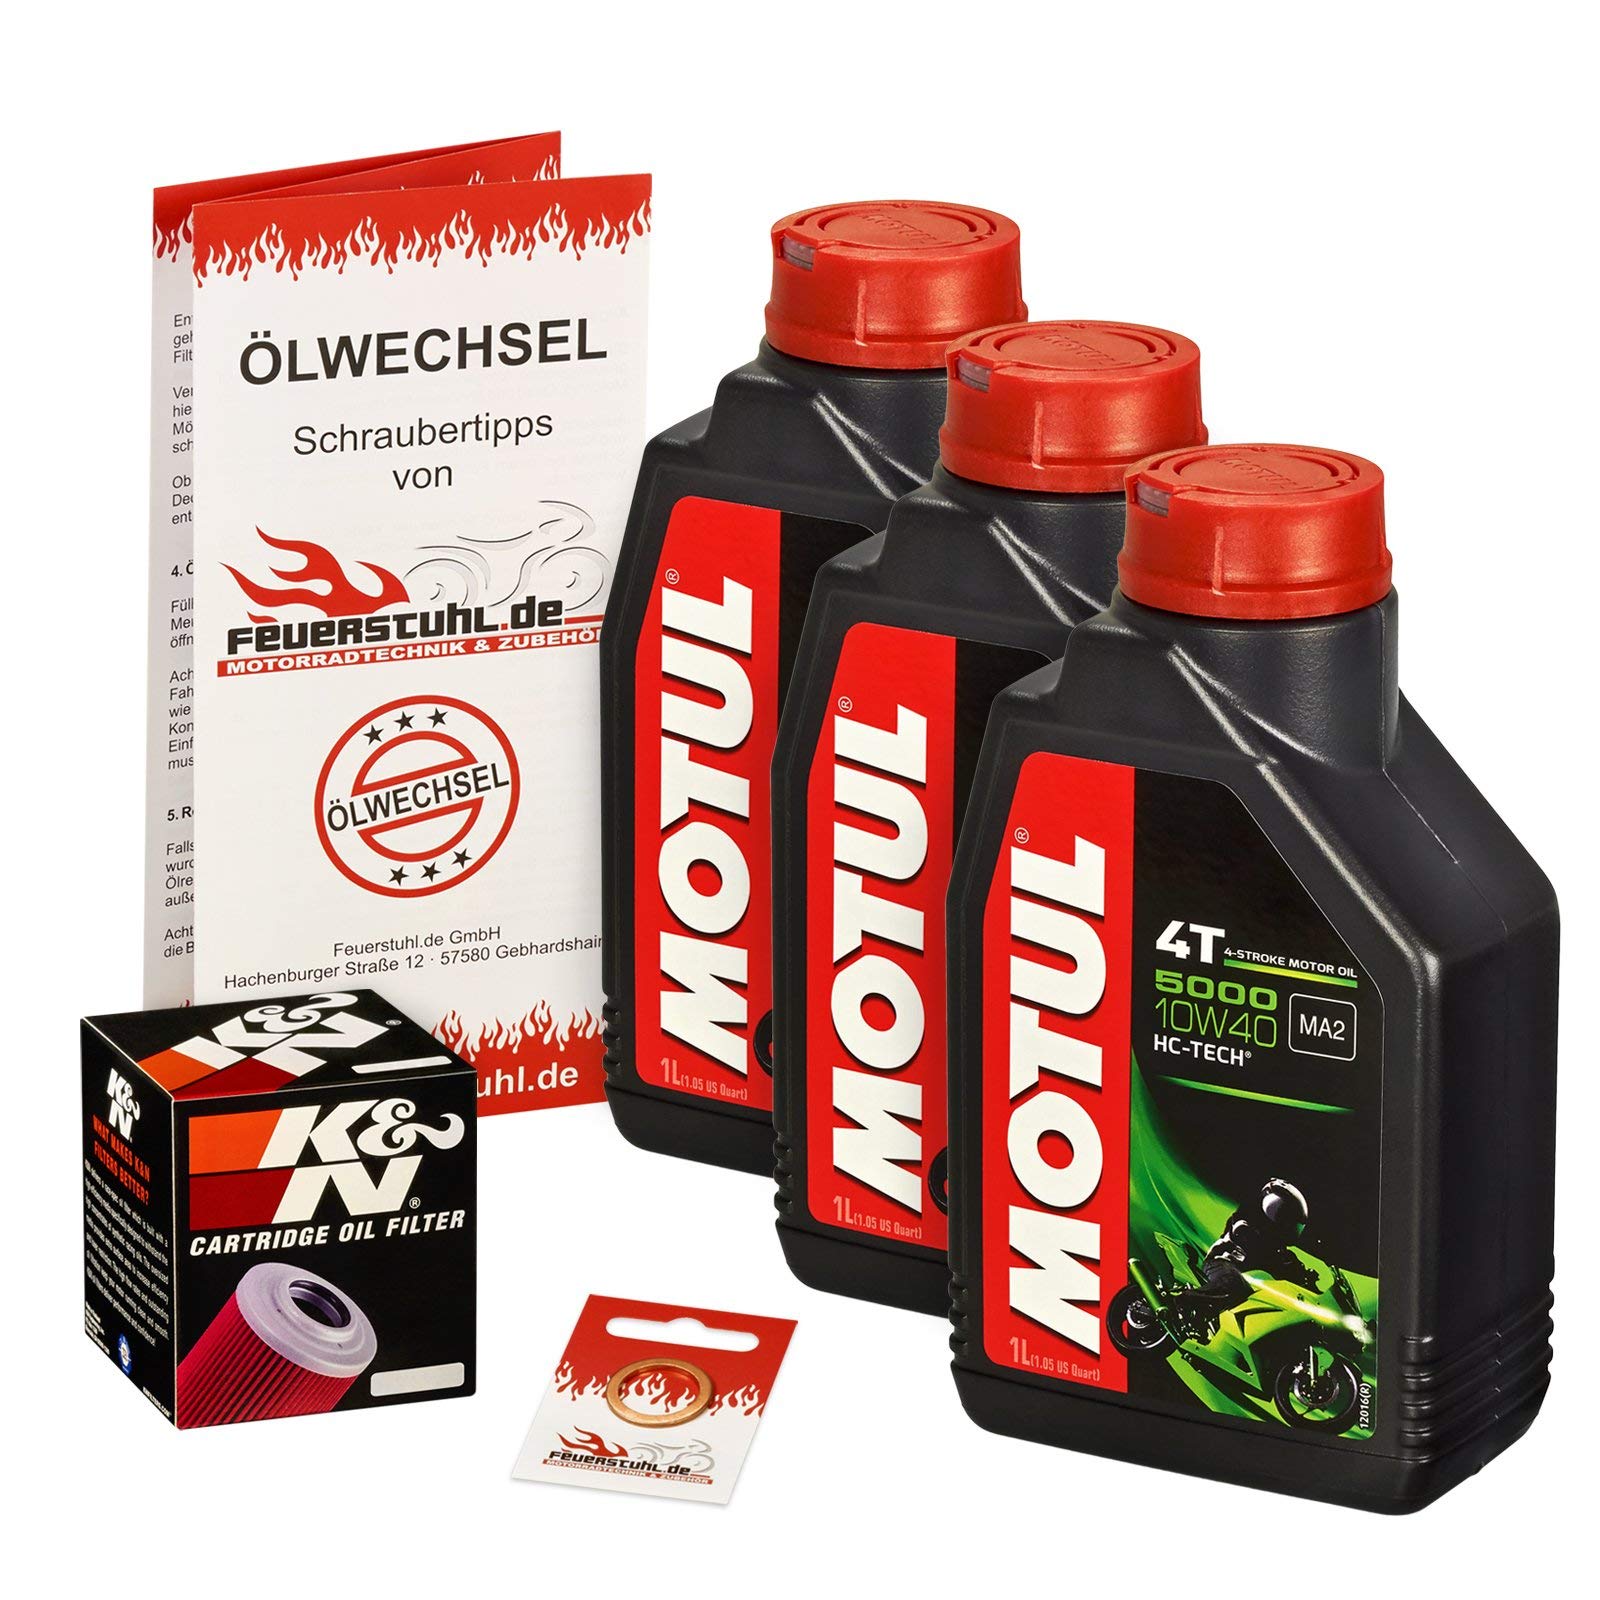 Motul 10W-40 Öl + K&N Ölfilter für Kawasaki KLX 650 C, 93-95, LX650C - Ölwechselset inkl. Motoröl, Filter, Dichtring von Motul